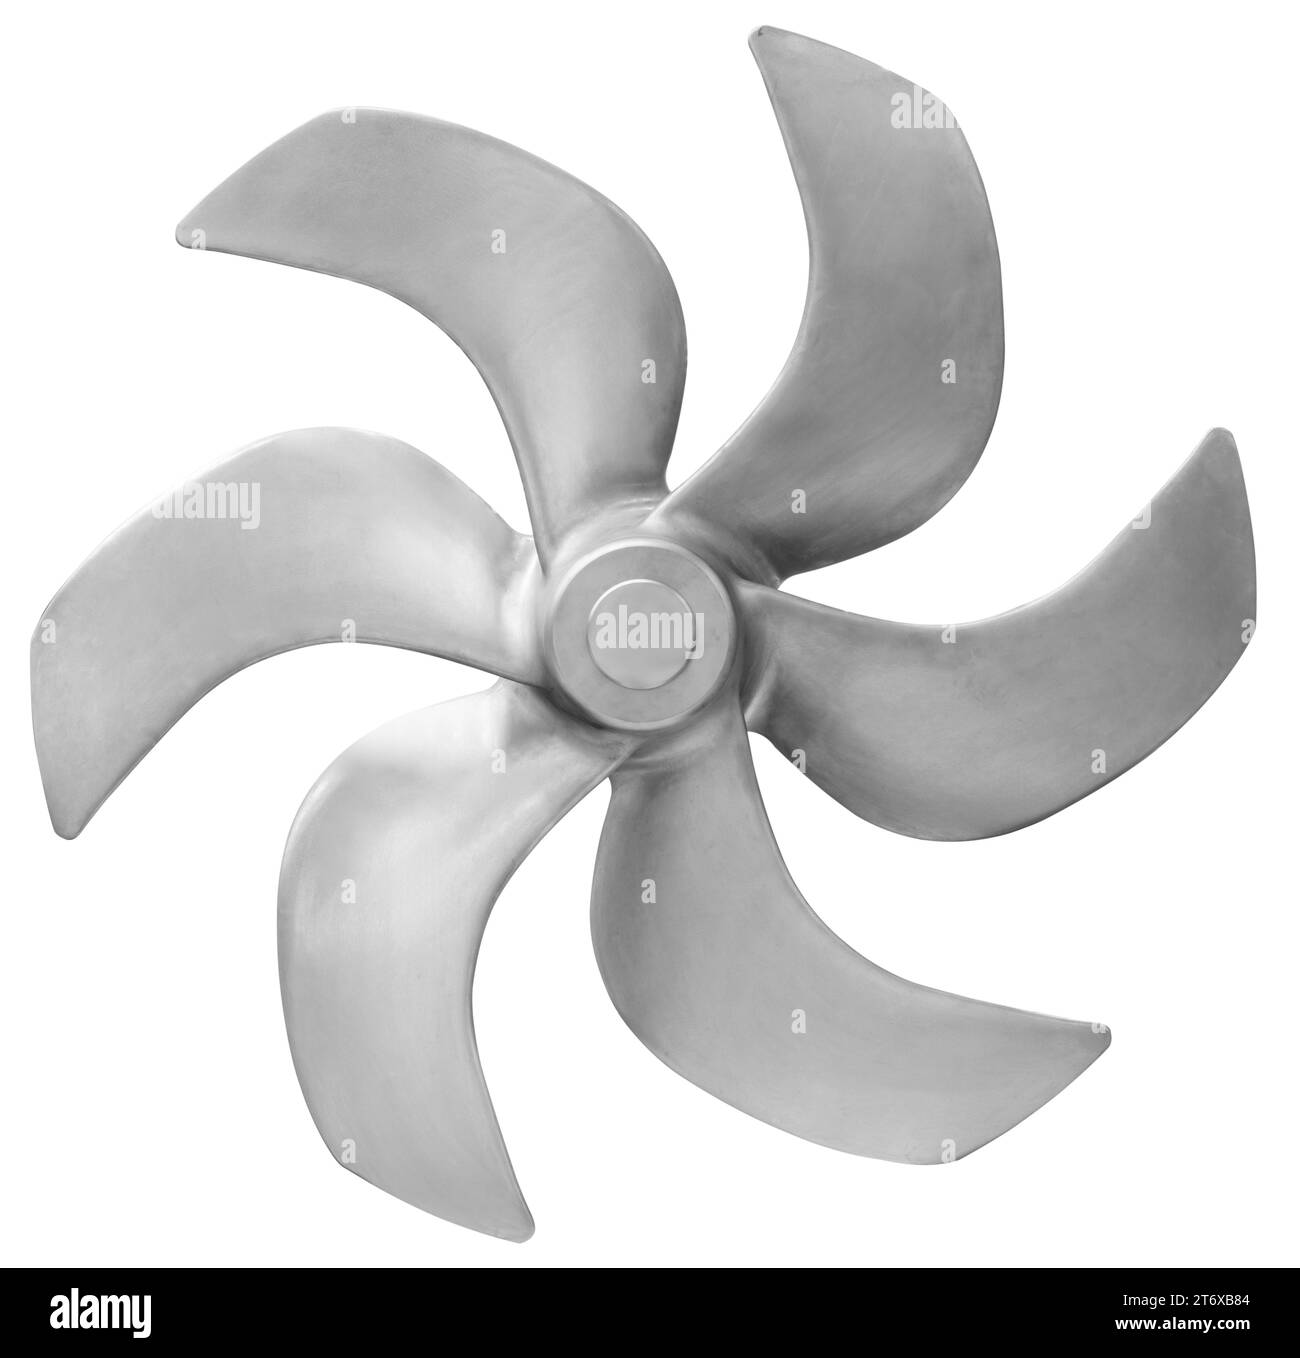 modern titanium high-speed anti-cavitation ship screw propeller isolated on a white background Stock Photo